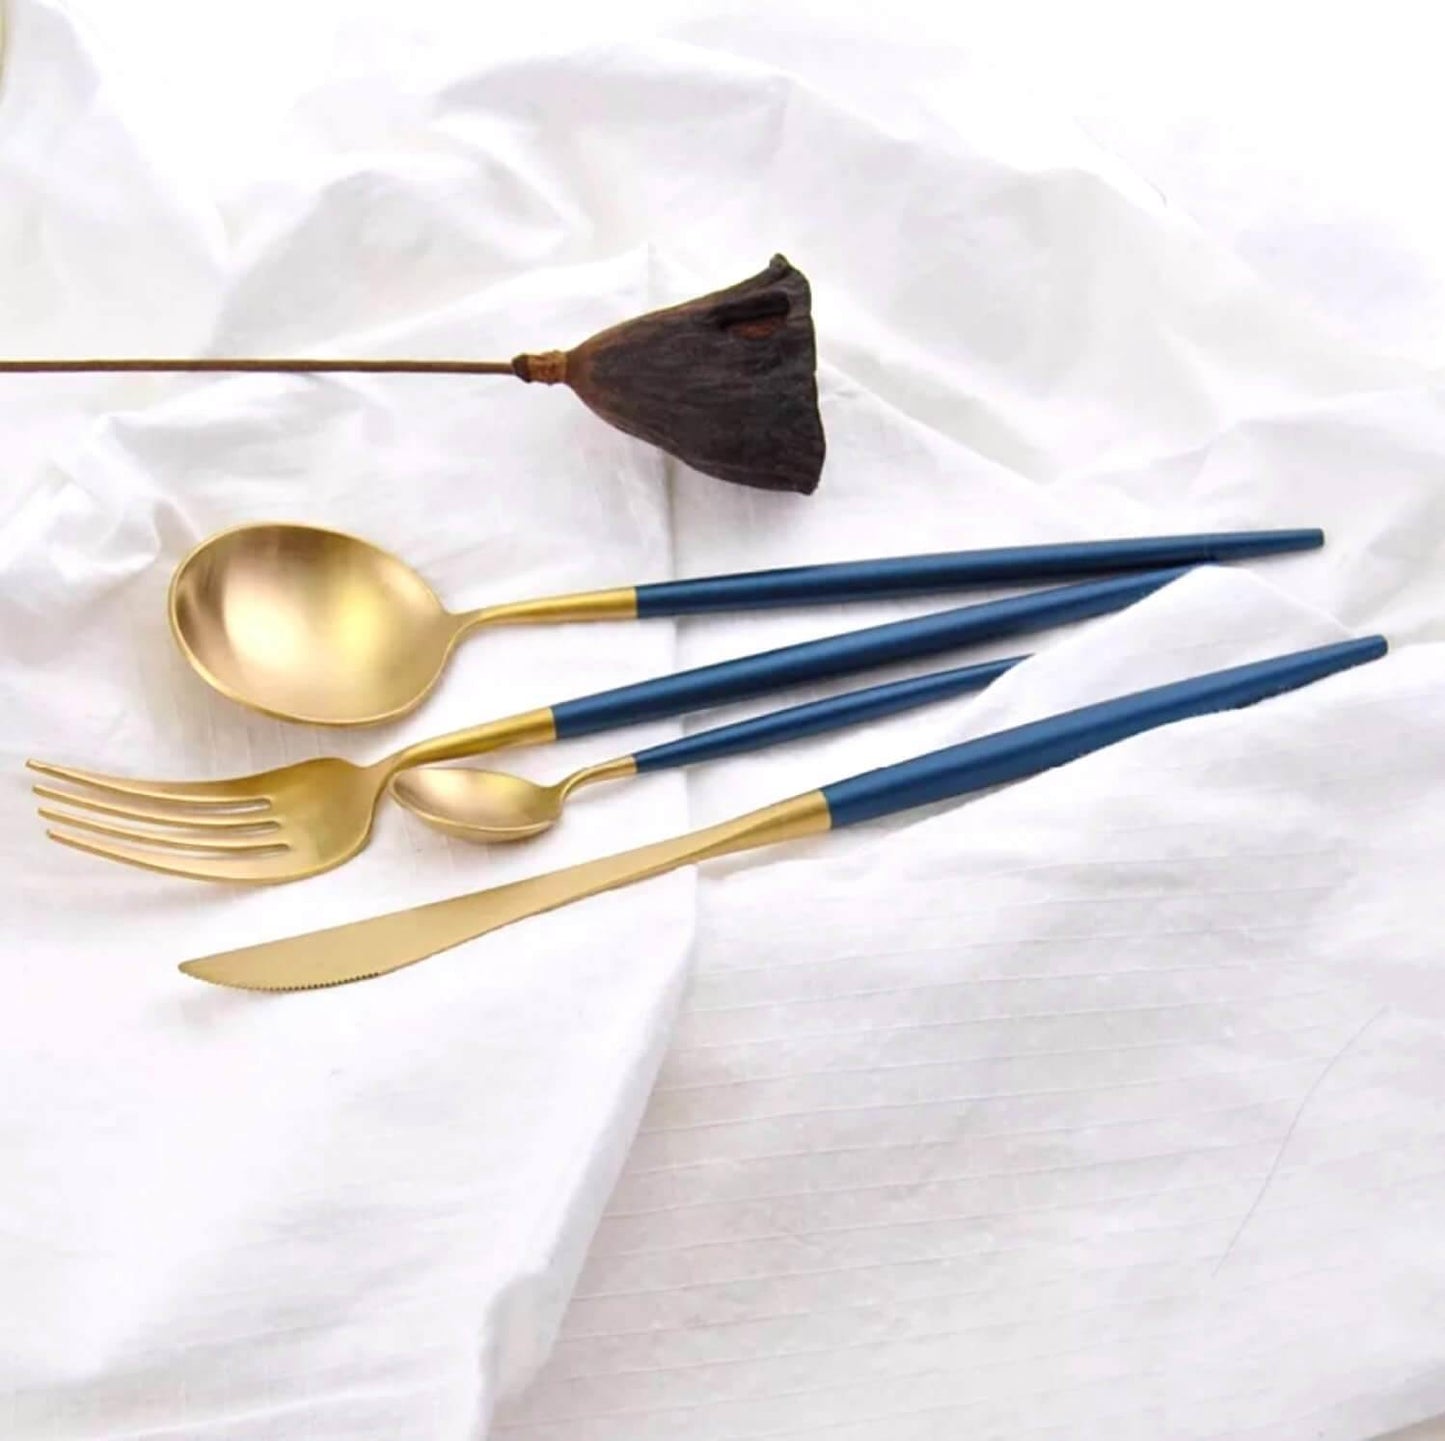 4 Pcs Blue & Gold Cutlery Set - Nordic Side - 